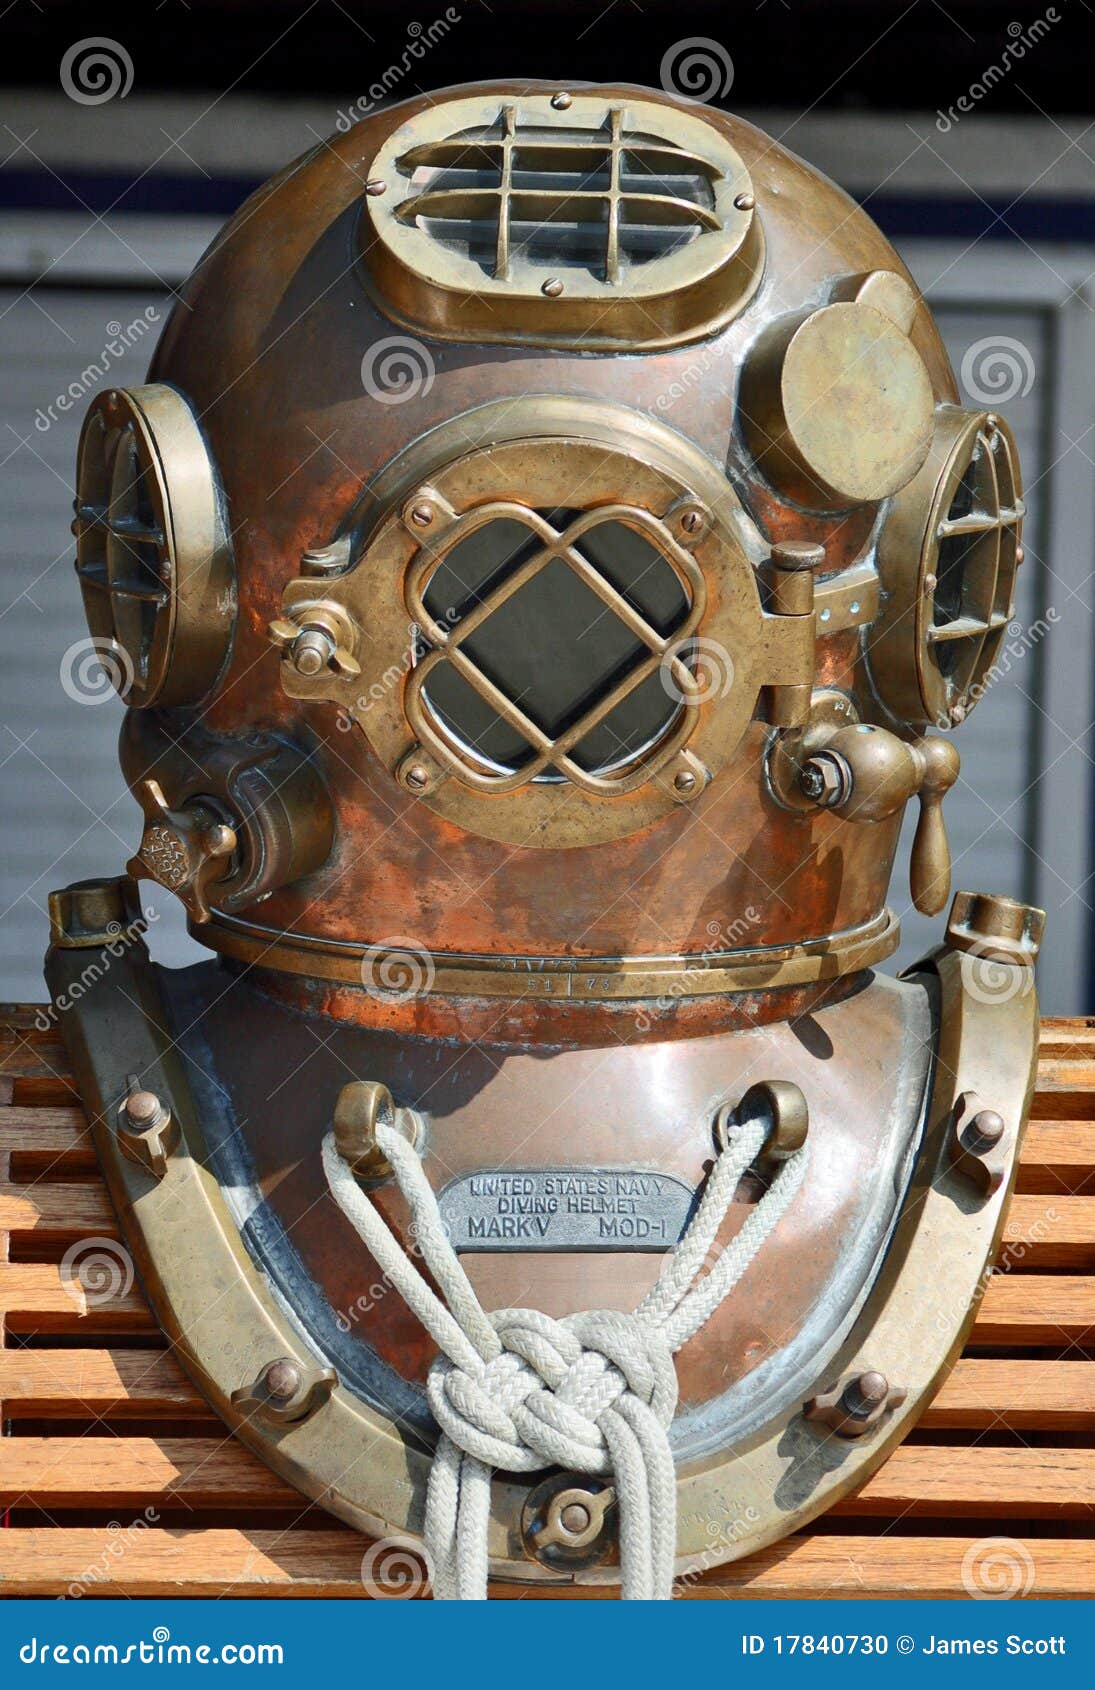 Details about   Sea Divers Scuba Antique US Navy Diving Helmet amazing Christmas Costumes Gift 